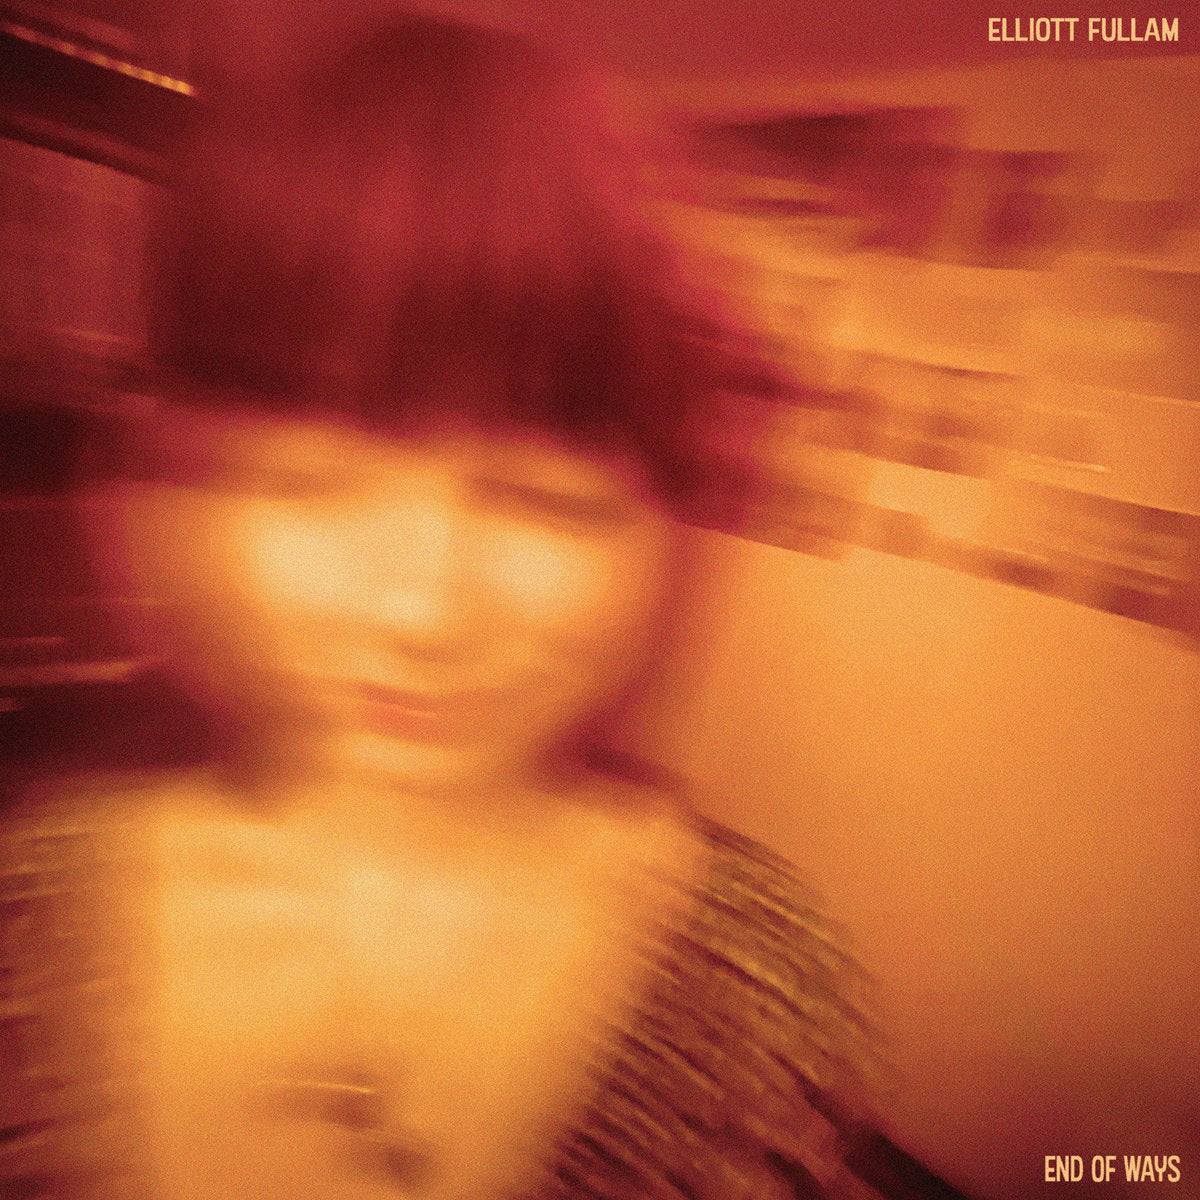 ELLIOT FULLAM - END OF WAYS Vinyl LP